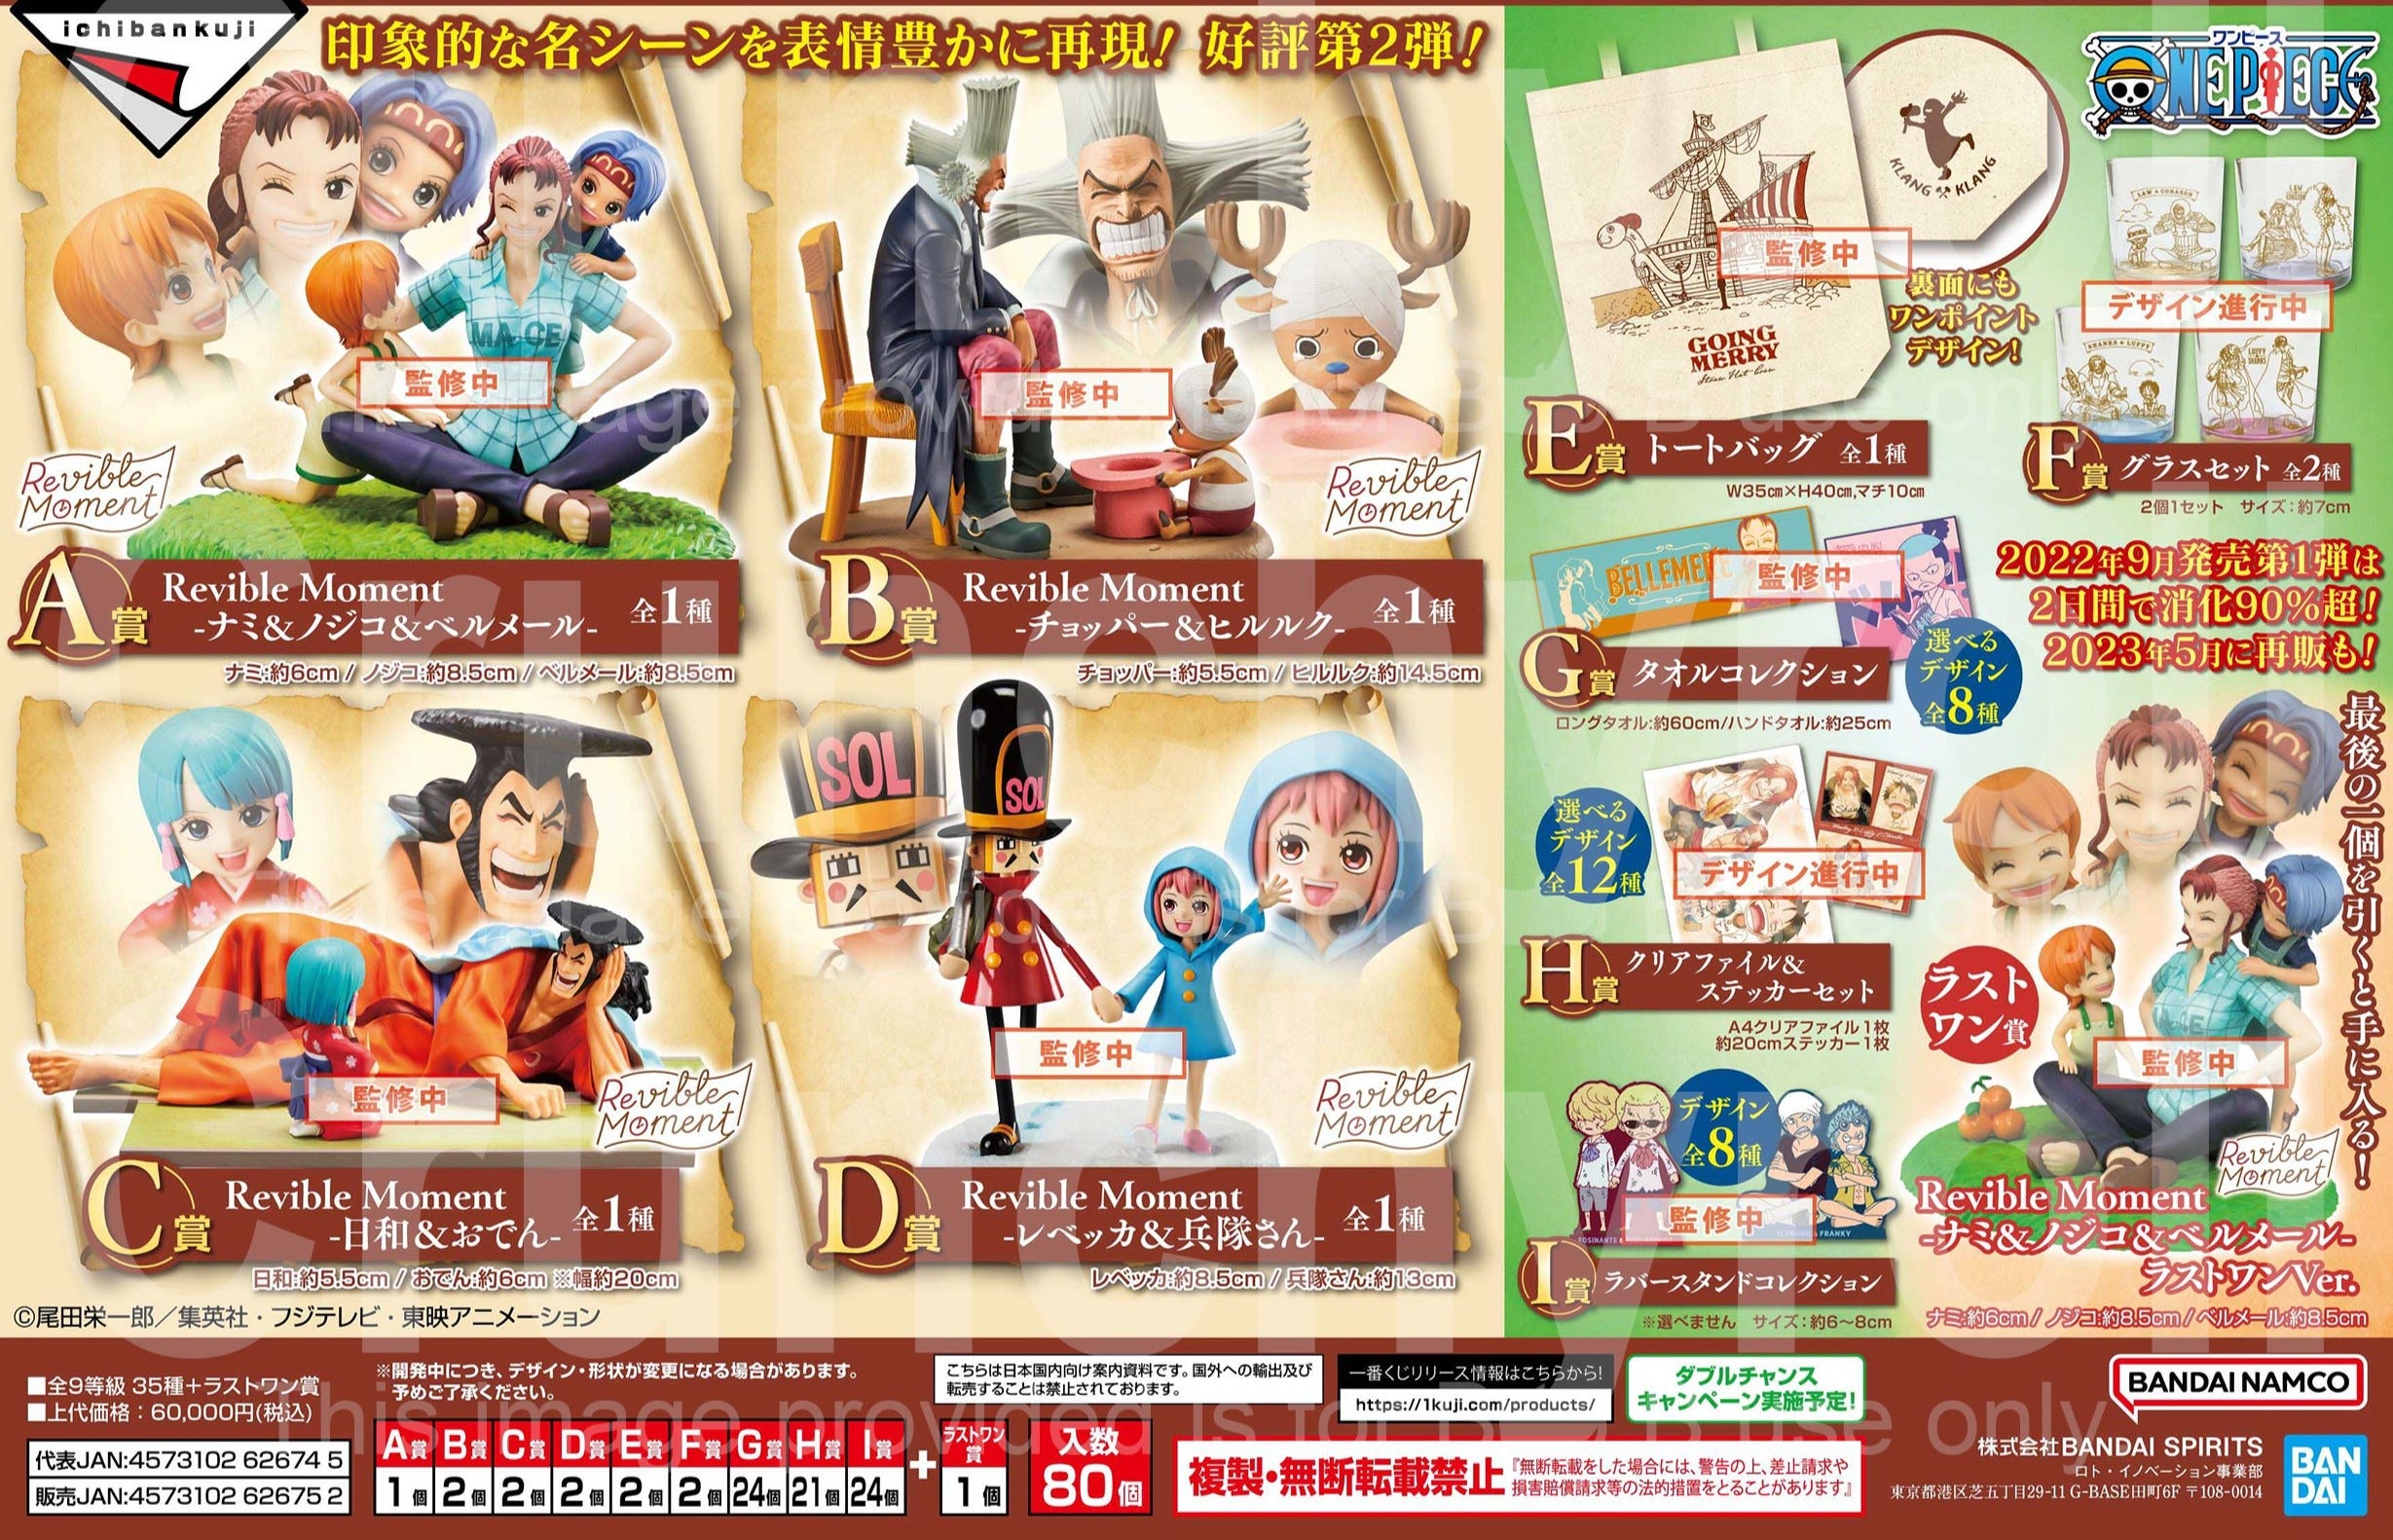 East Vic Park - Ichibankuji: One Piece Emotional Stories 2